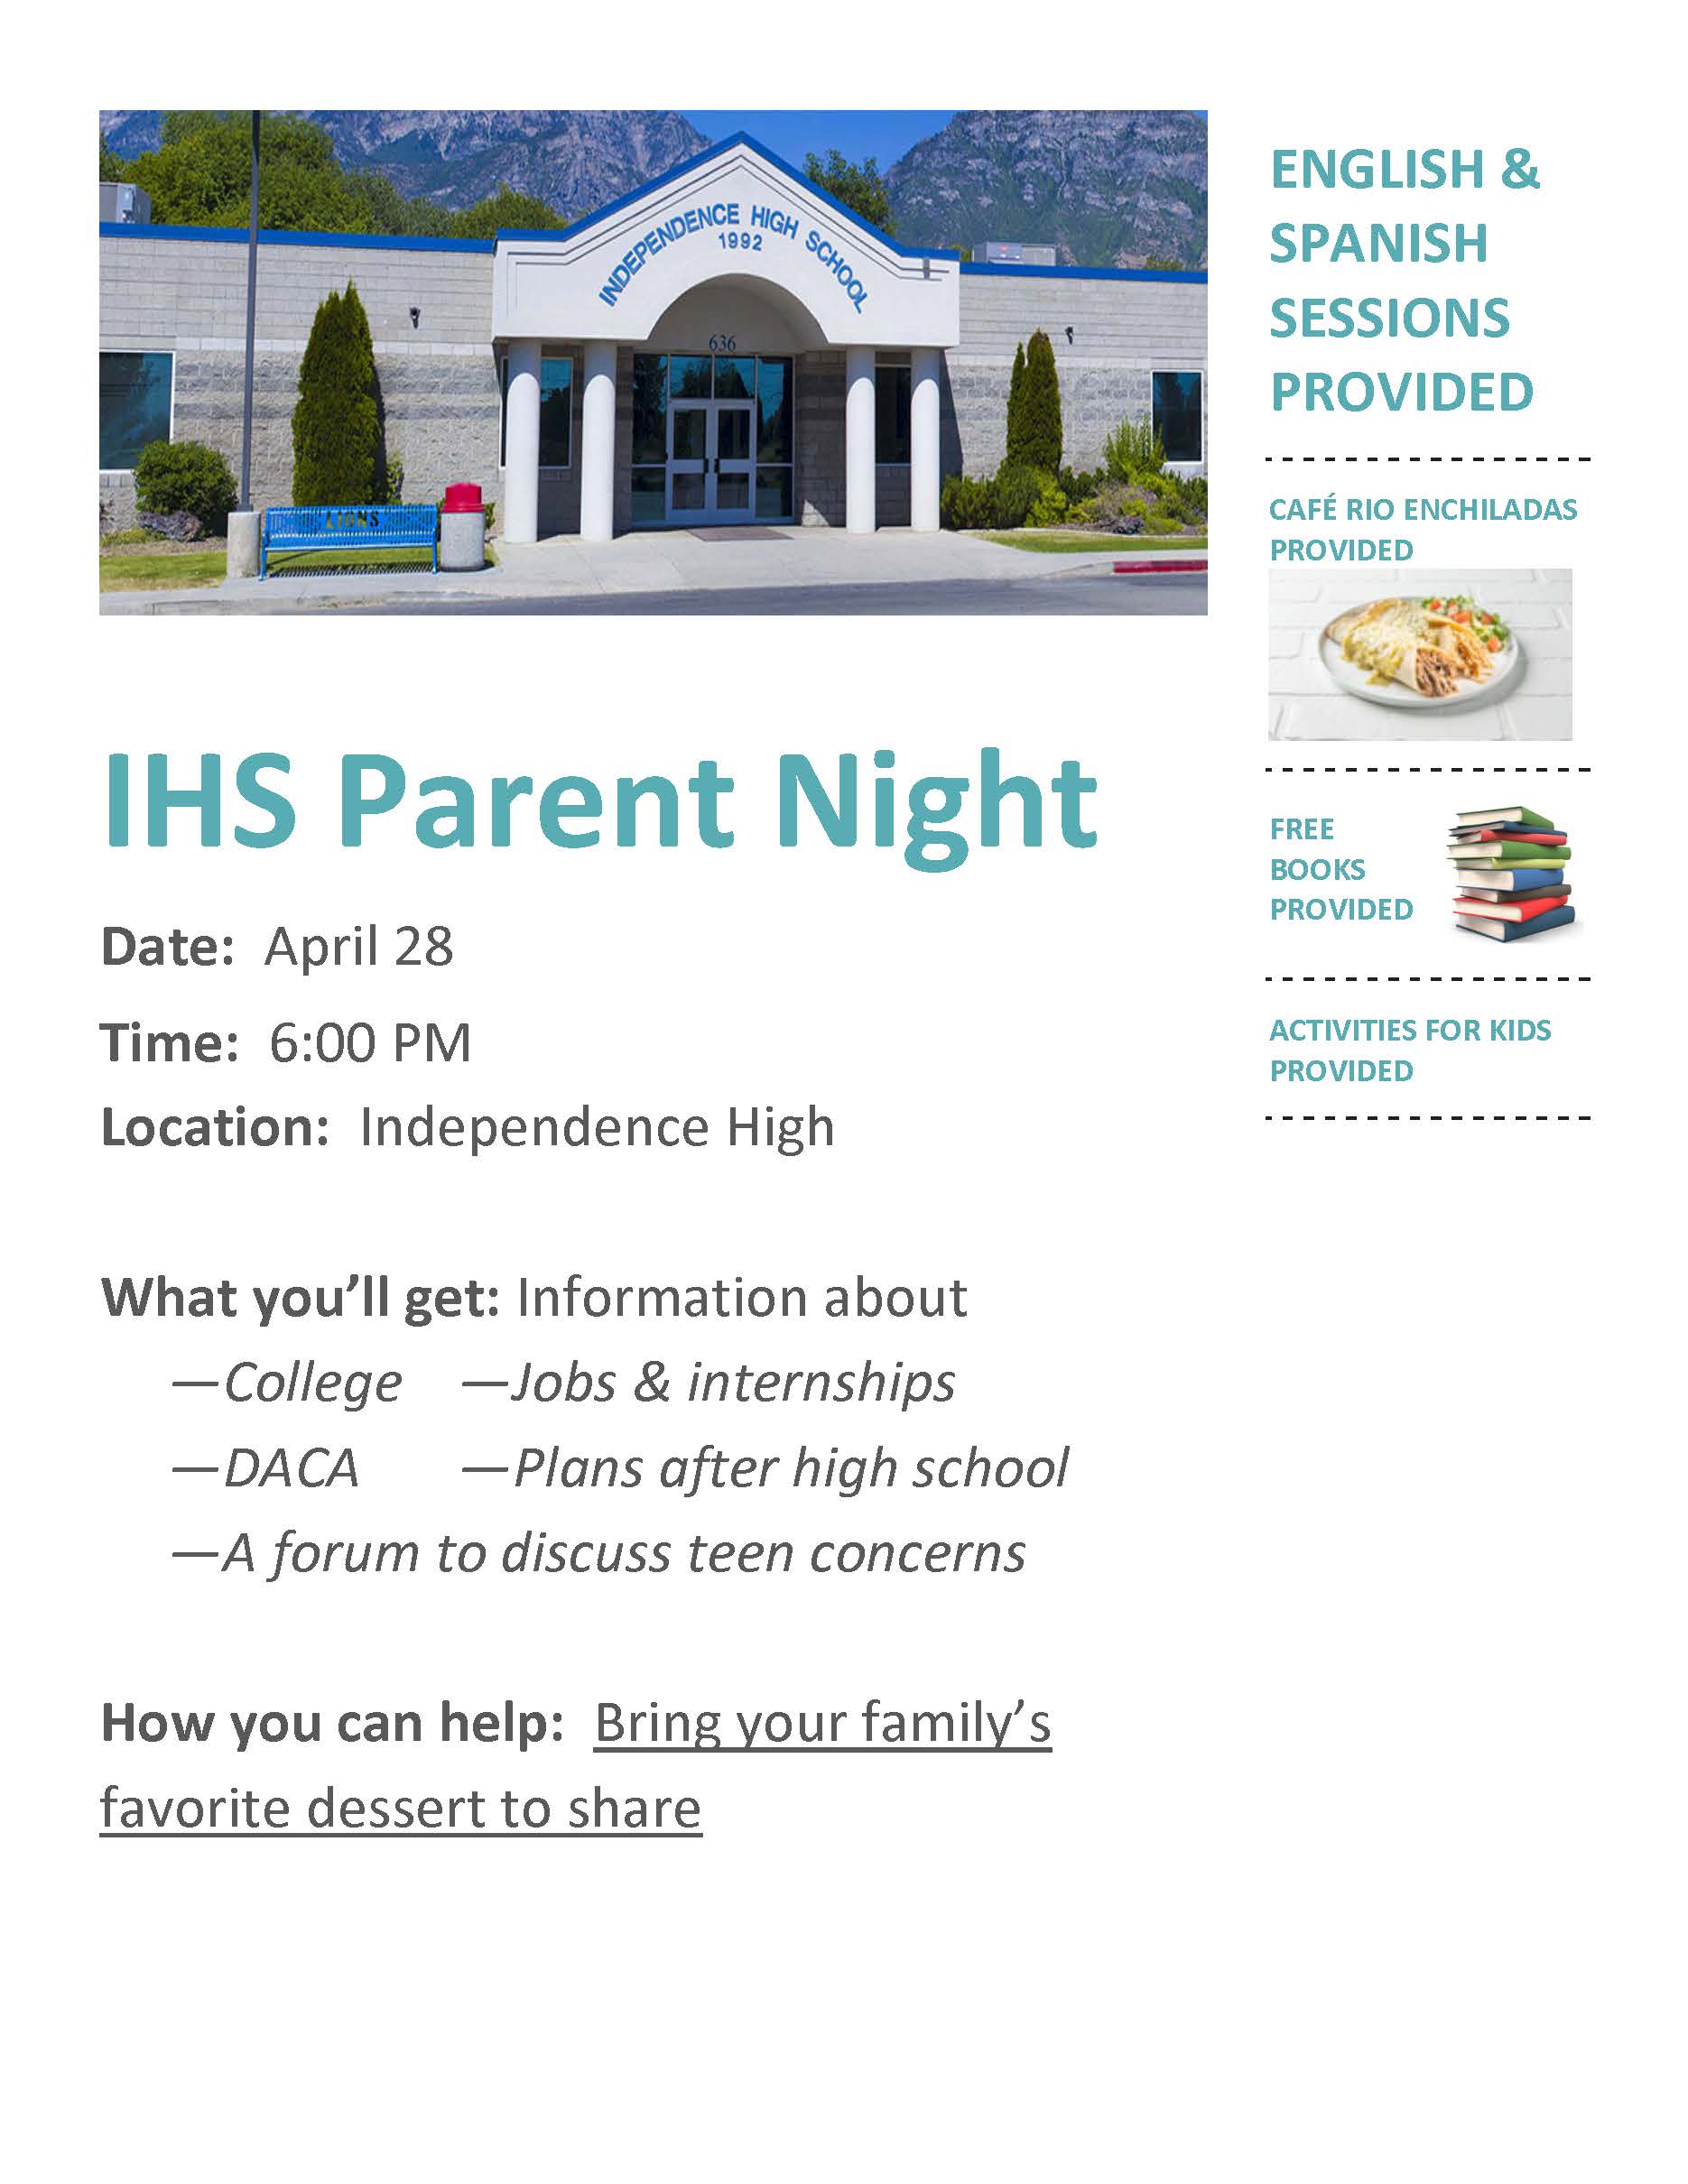 Parent night flyer